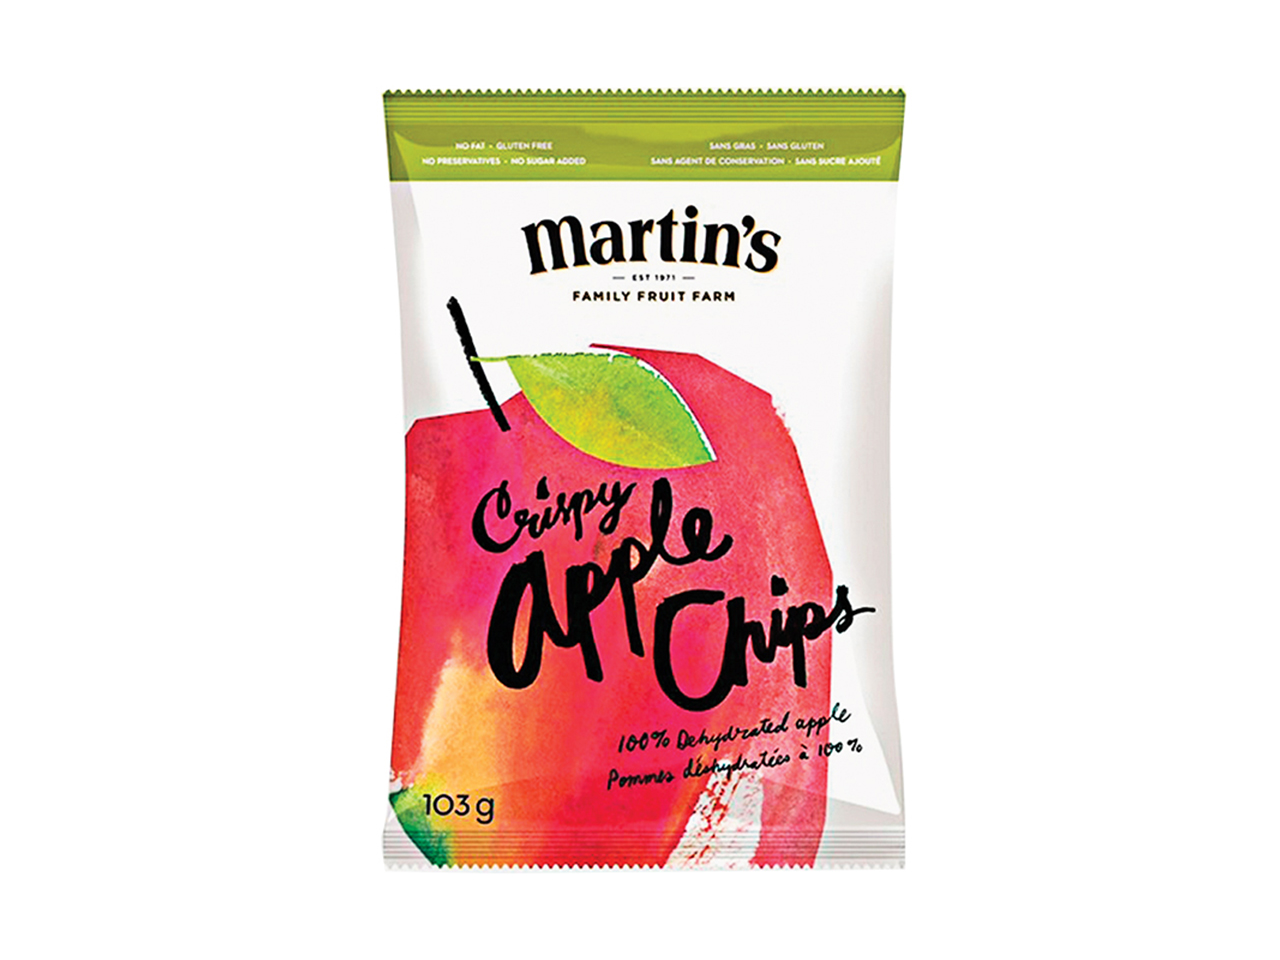 a bag of martin's crispy apple chips